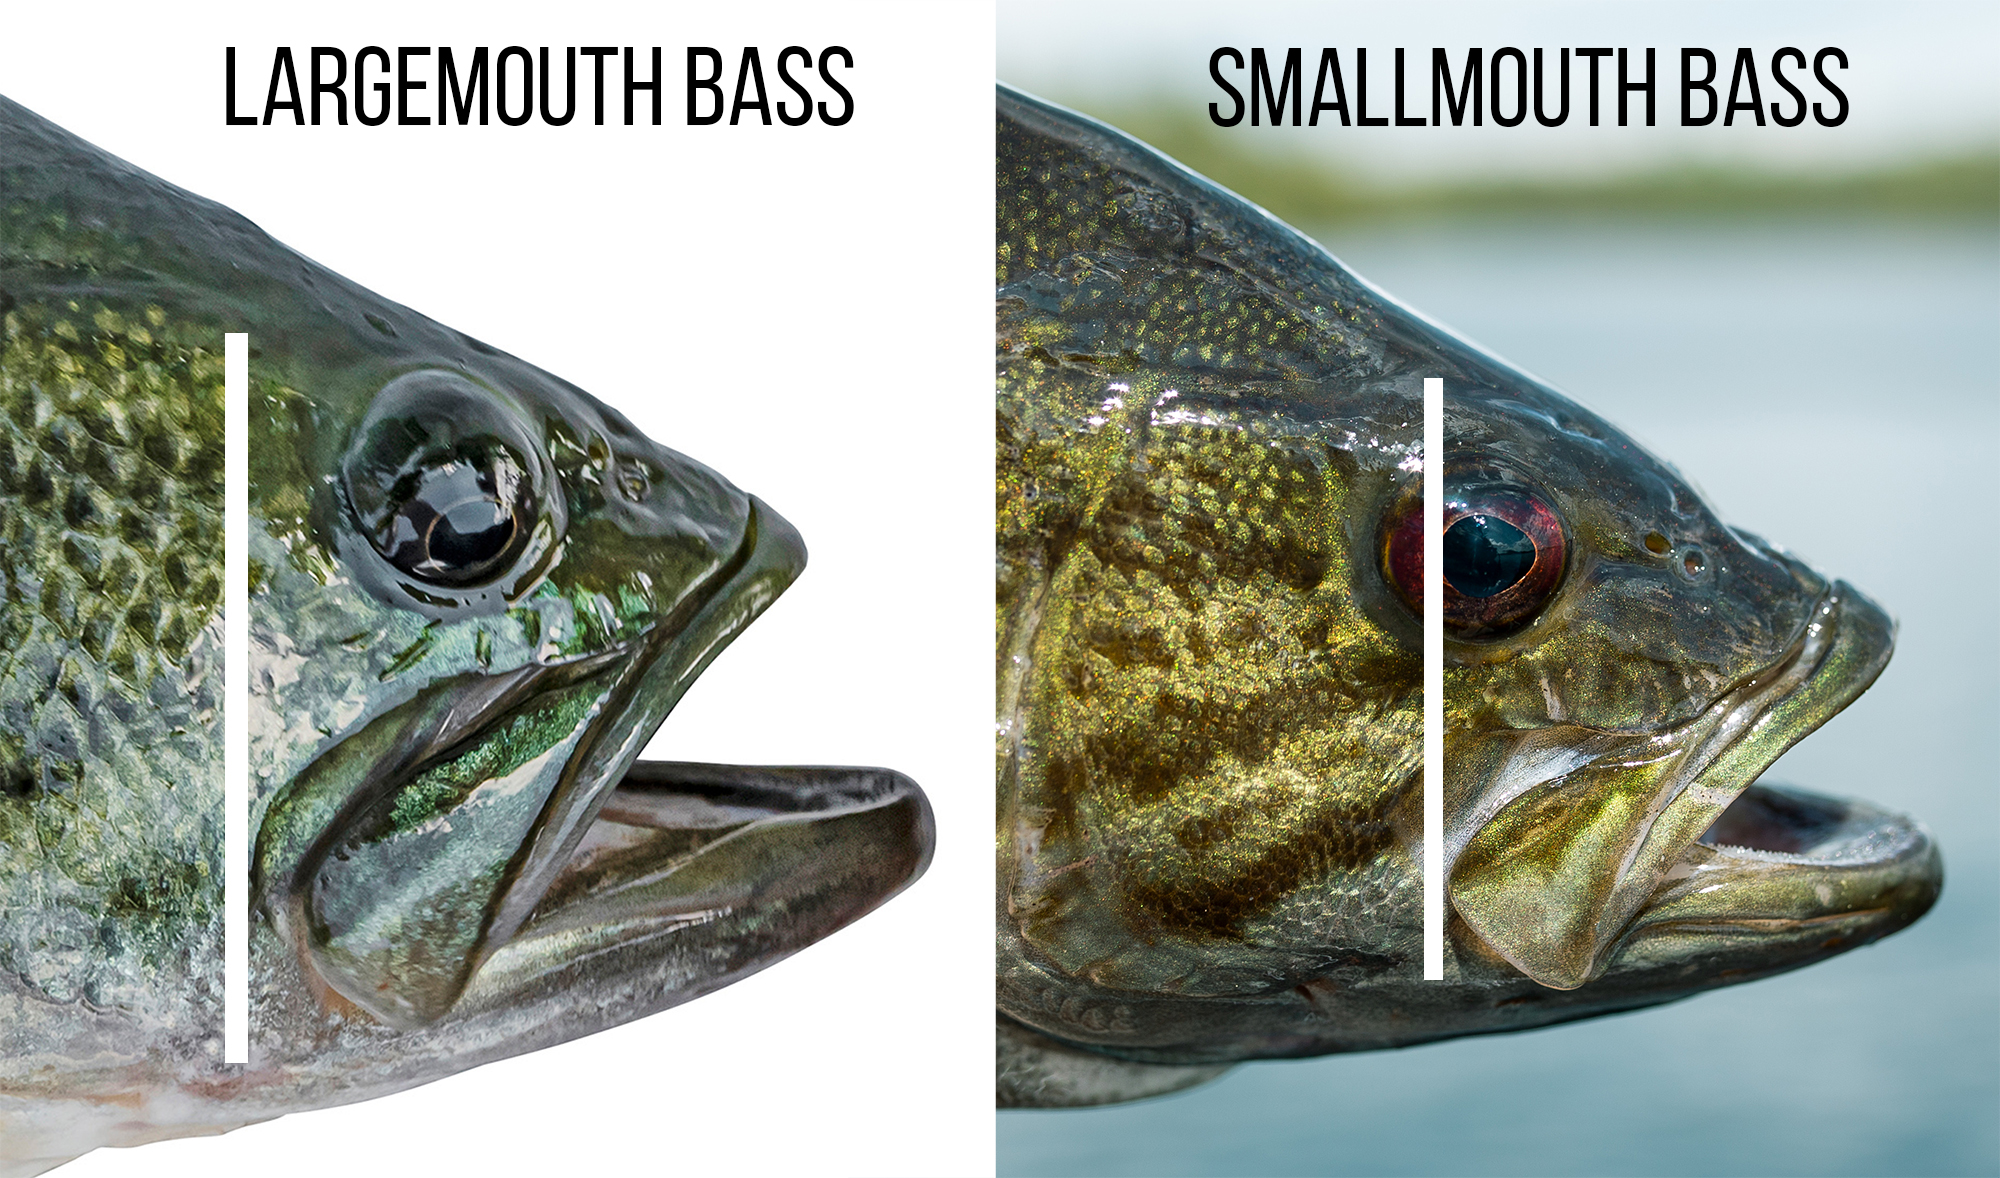 Spotted Bass vs. Largemouth Bass?